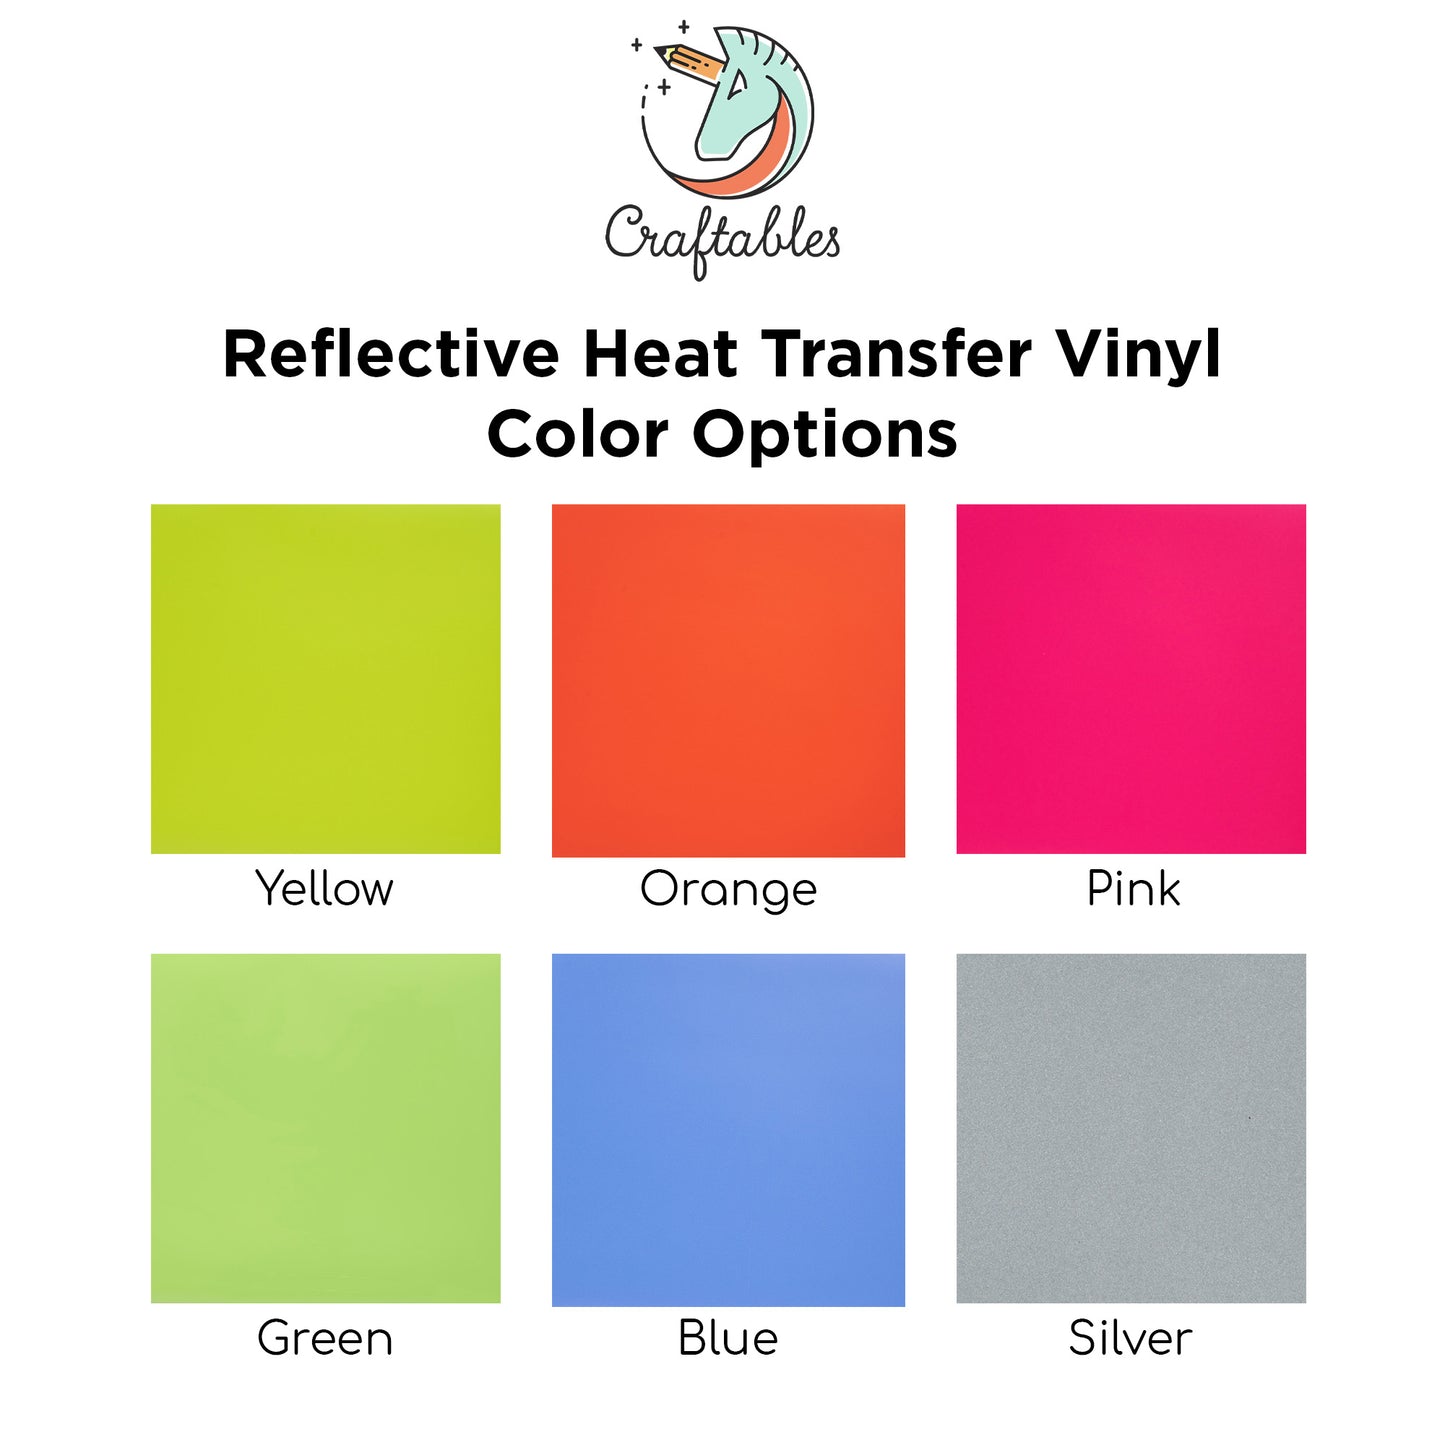 Orange Reflective Heat Transfer Vinyl Sheets By Craftables